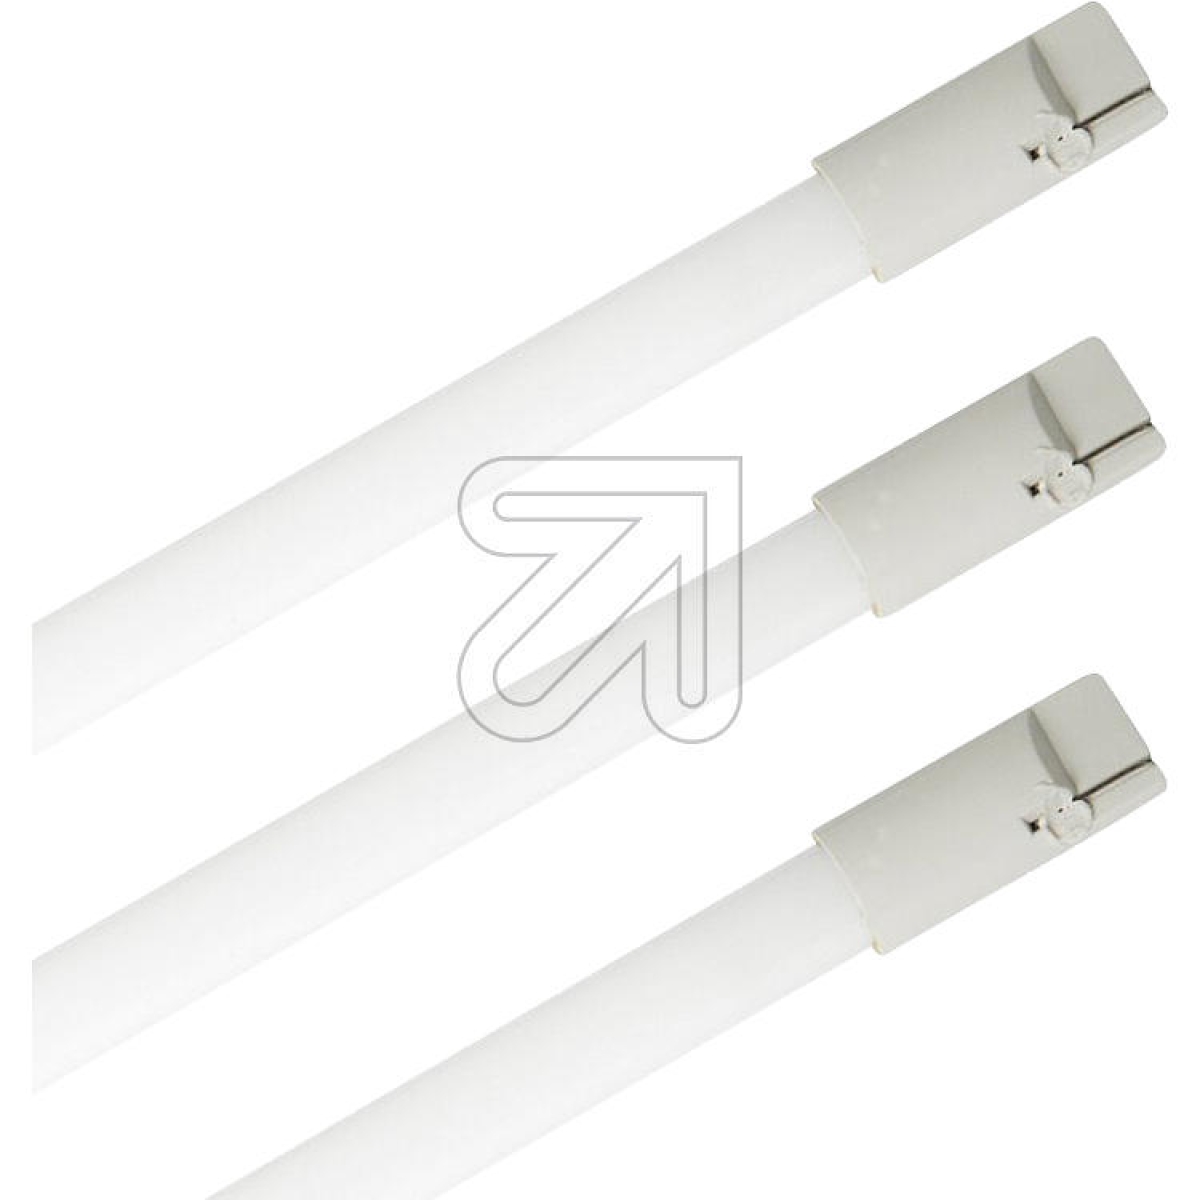 LEDmaxxSET of 3 LEDMAXX T2 fluorescent lamps 8W/3000K T28W30 (1 piece = 3 bulbs)Article-No: 528080